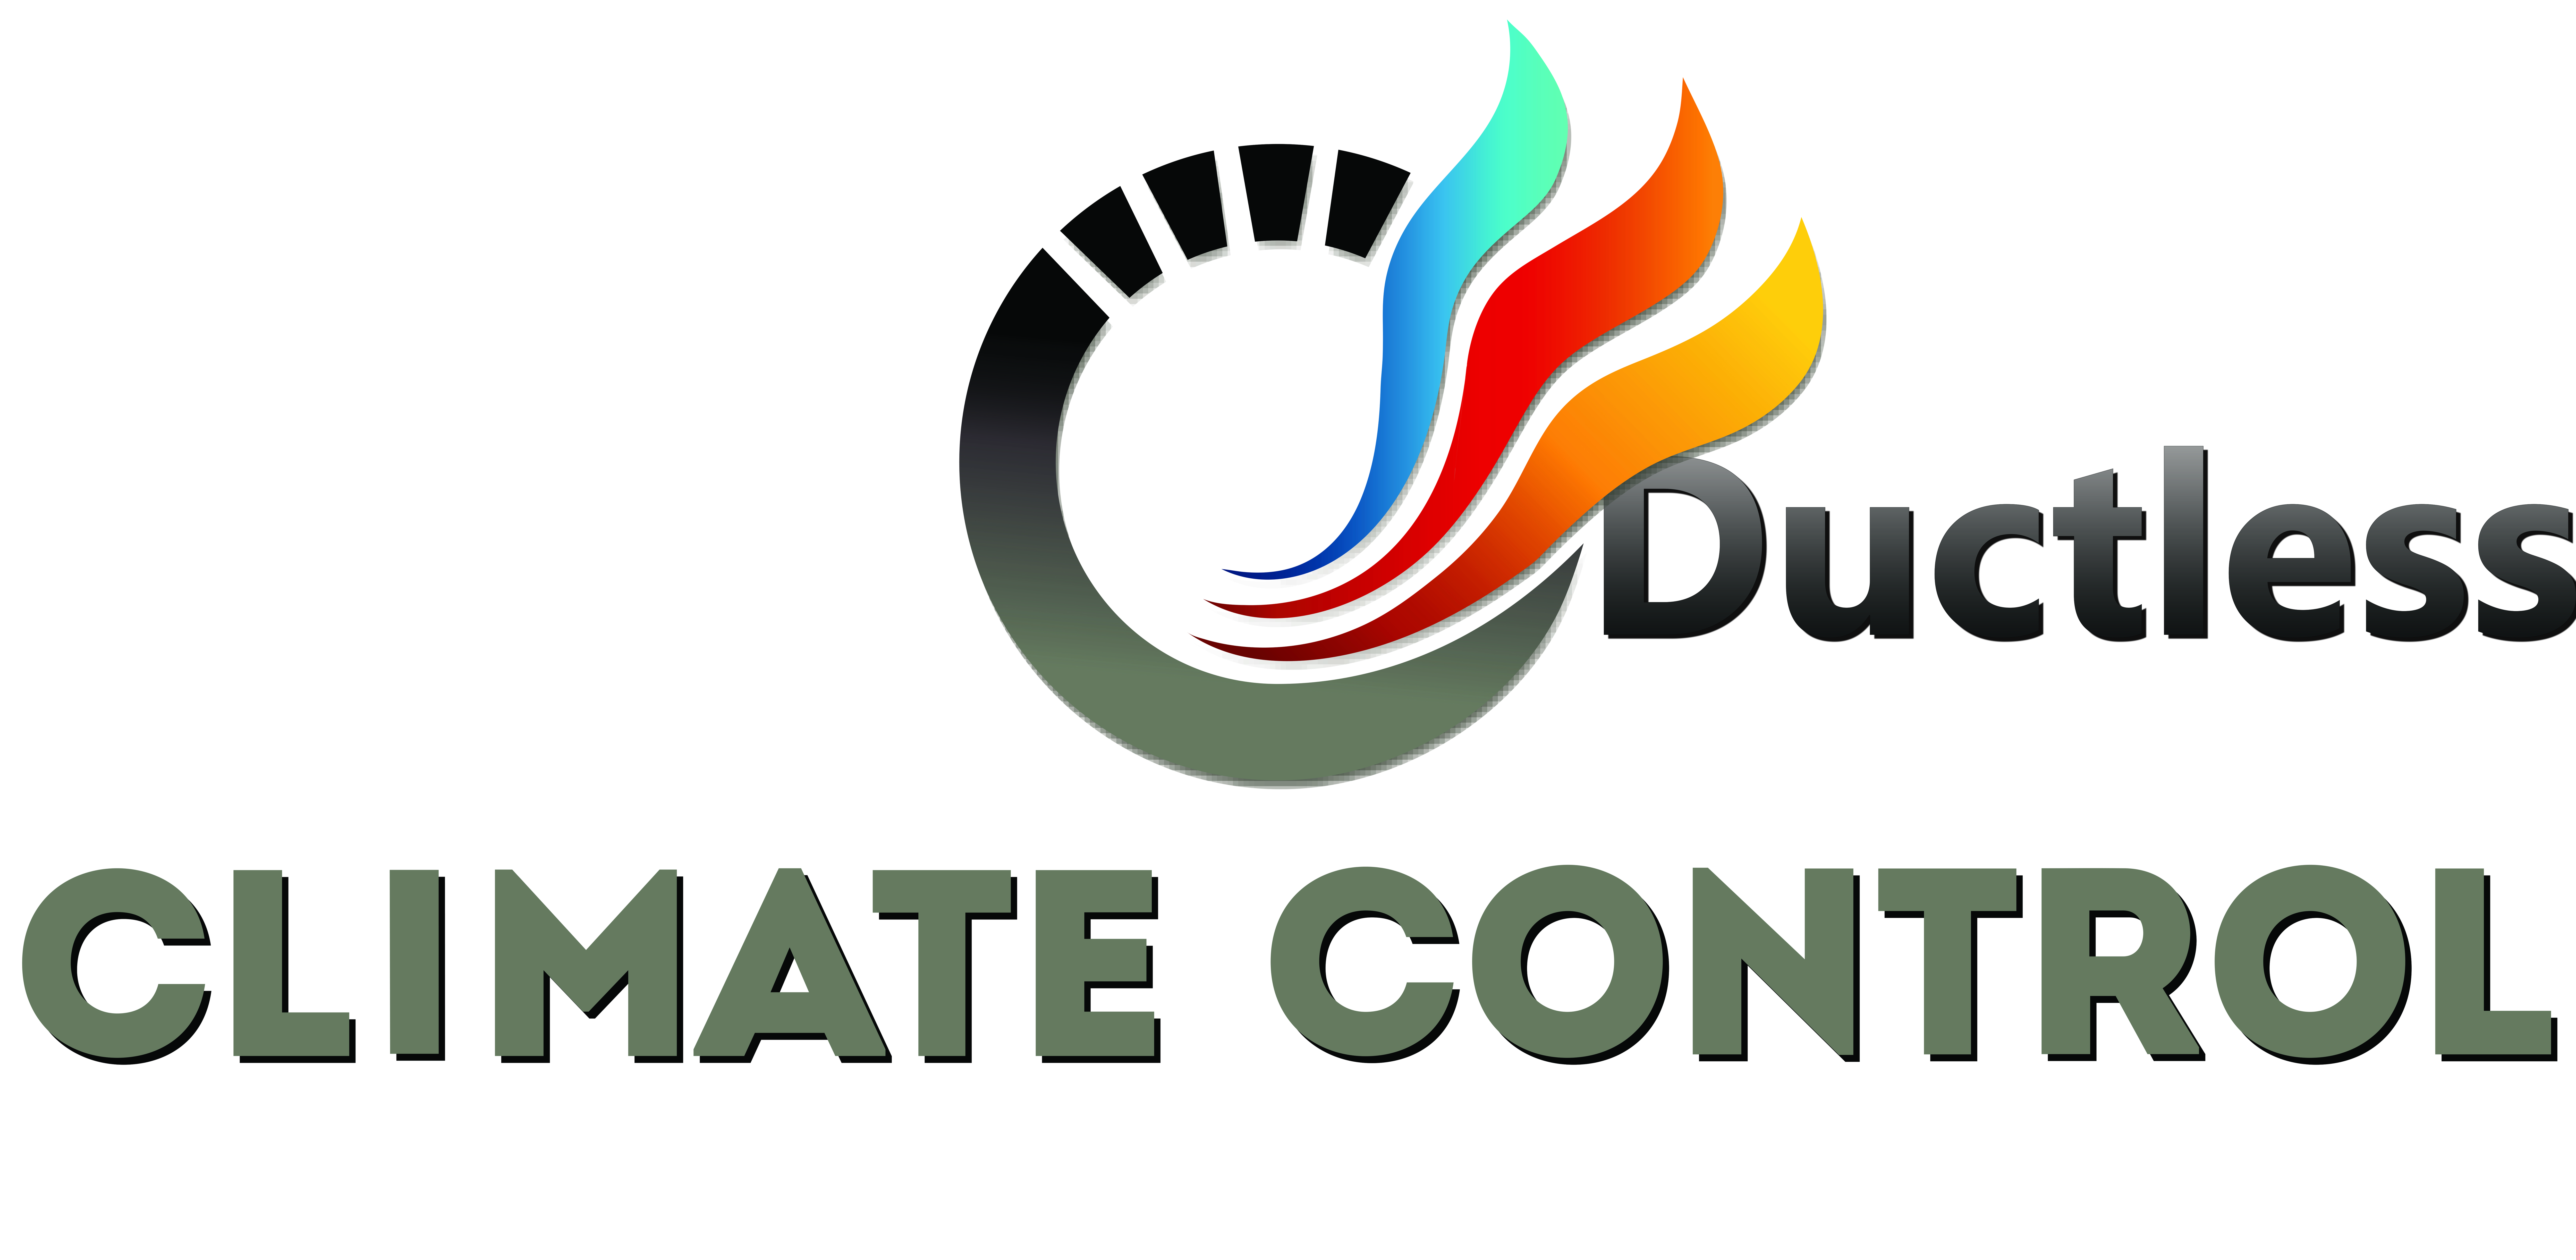 Climate Control Logo